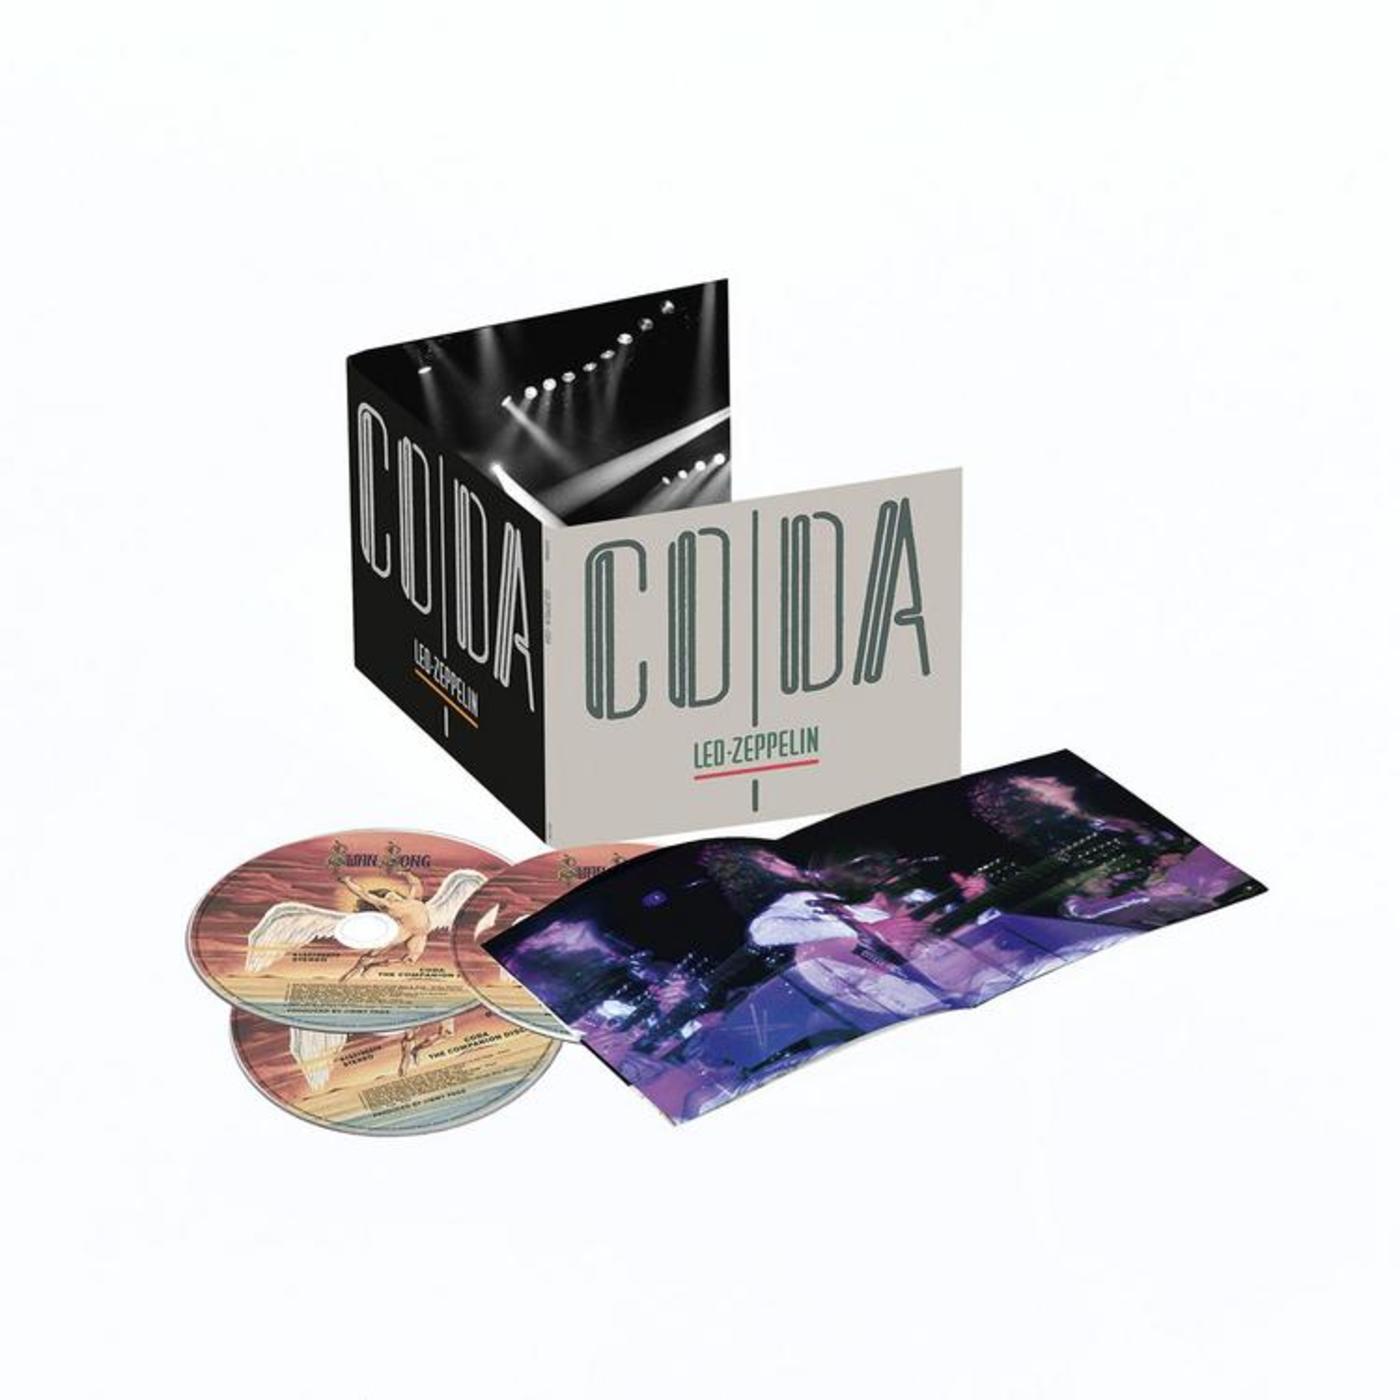 CODA - 3CD Deluxe Edition